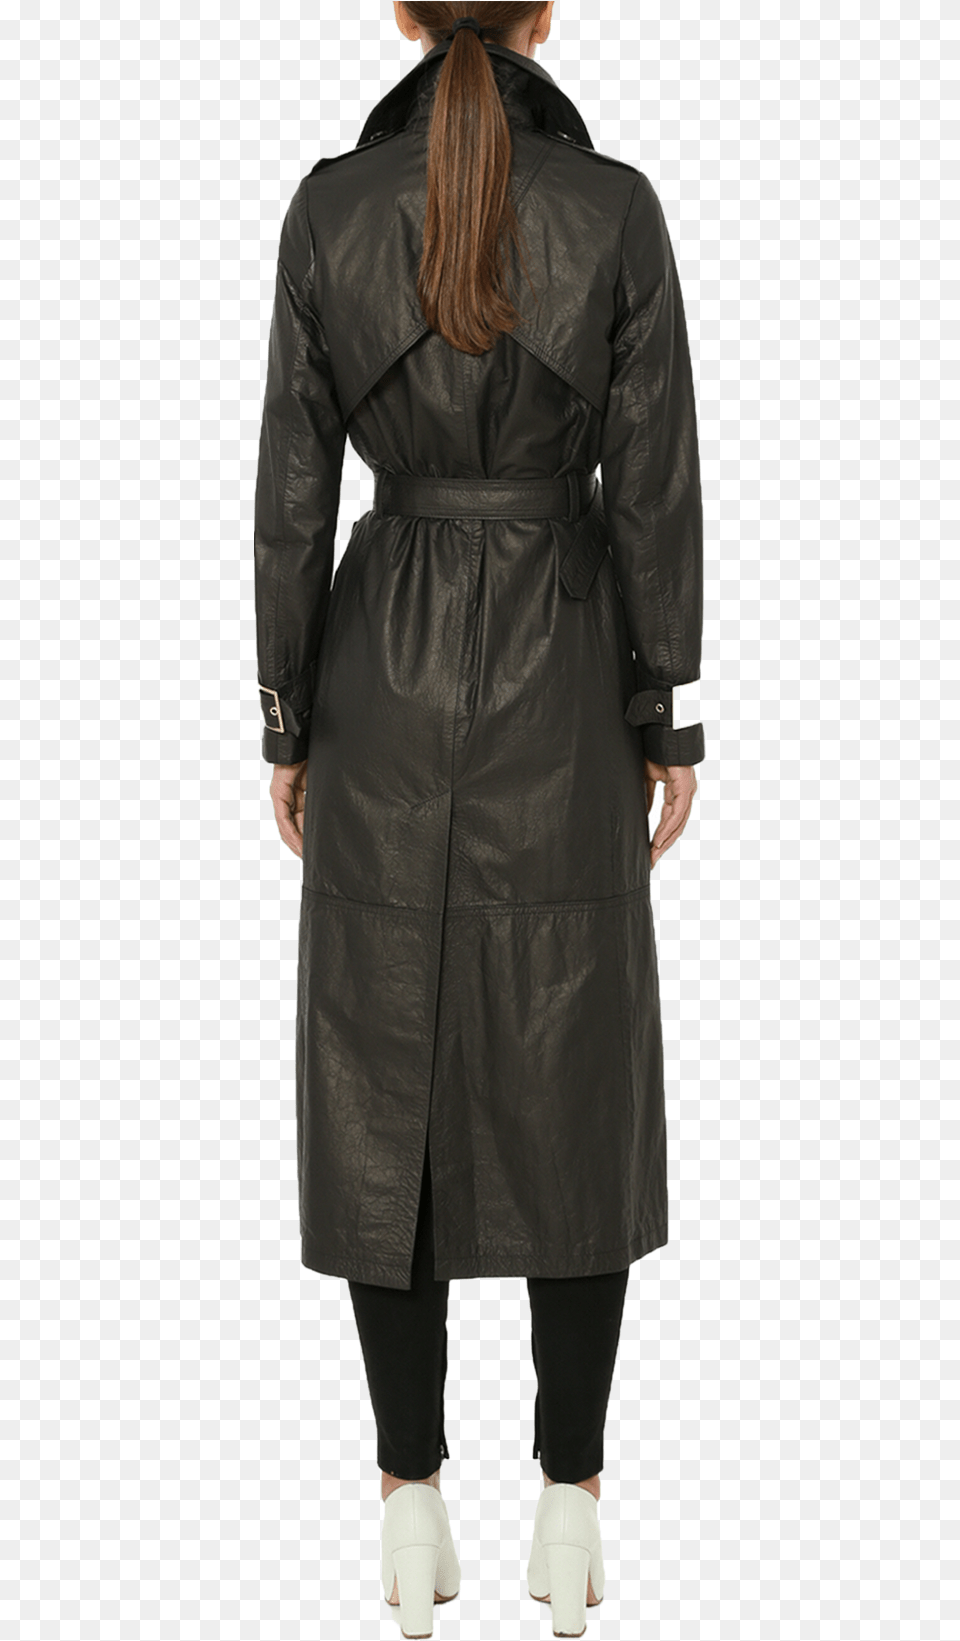 Jane Black Bk Overcoat, Clothing, Coat, Adult, Person Free Transparent Png